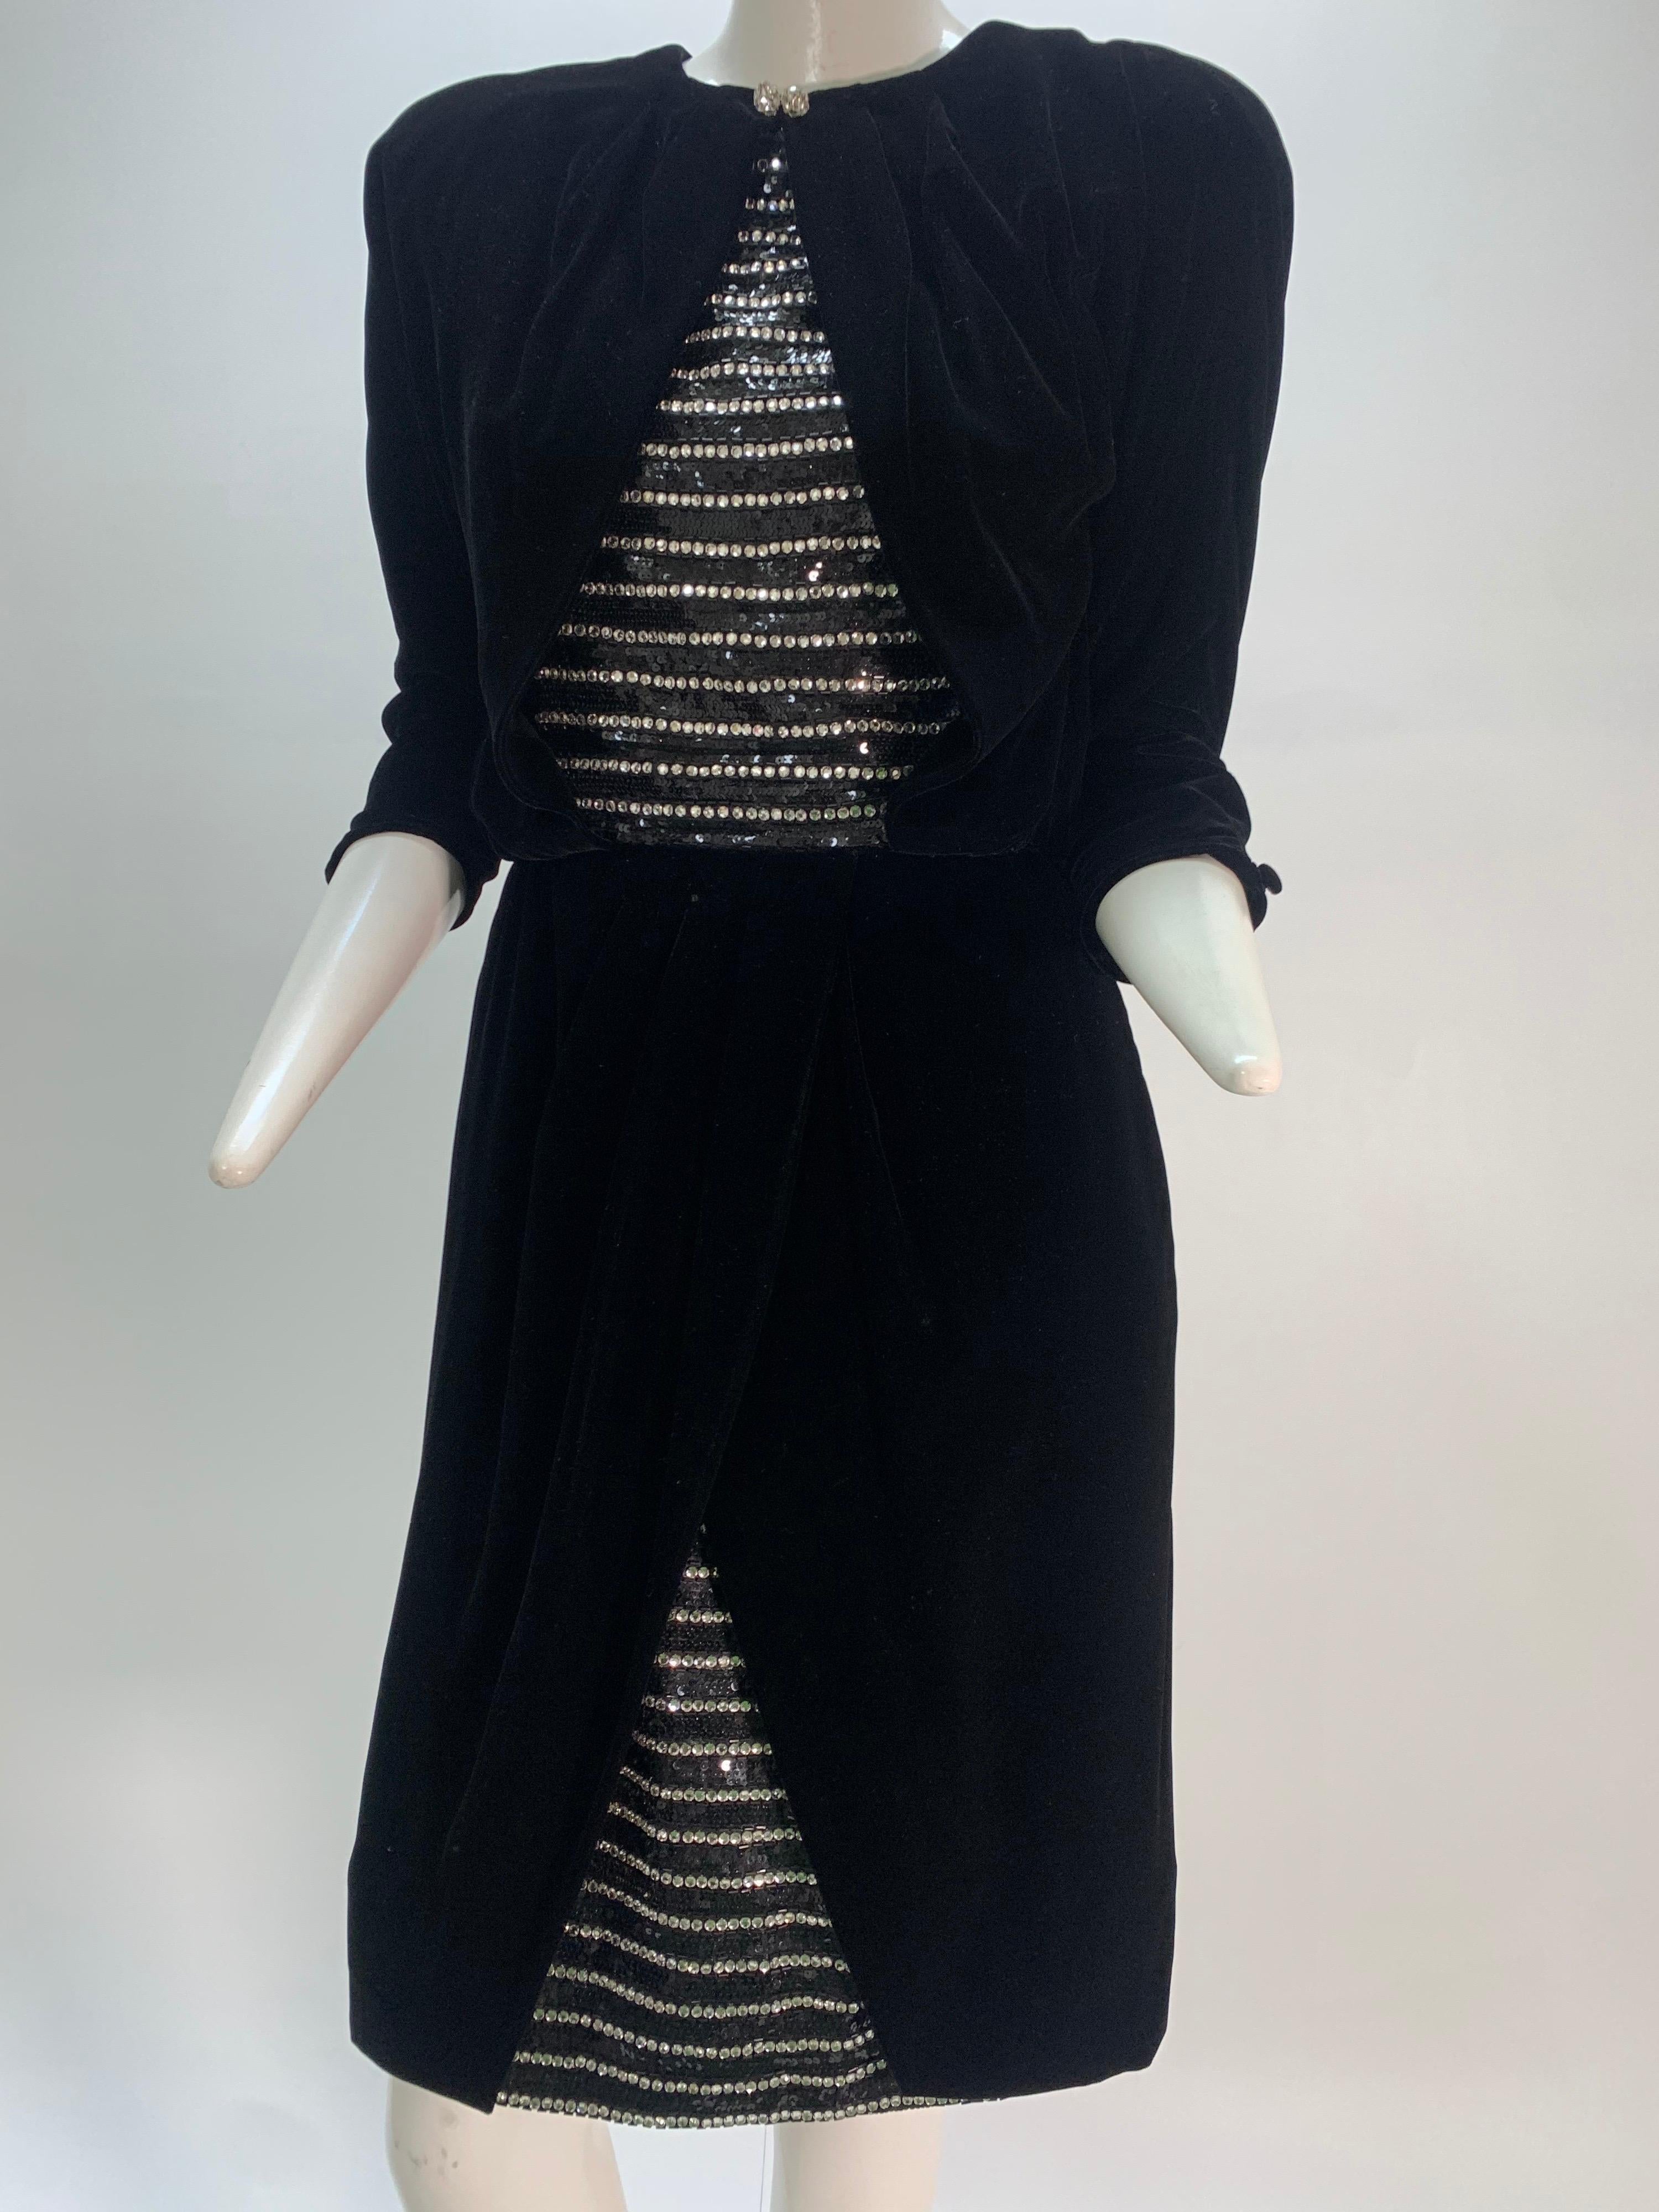 1980 Carolyne Roehm Black Velvet Cocktail Dress W/ Rhinestone & Sequin Stripes For Sale 4